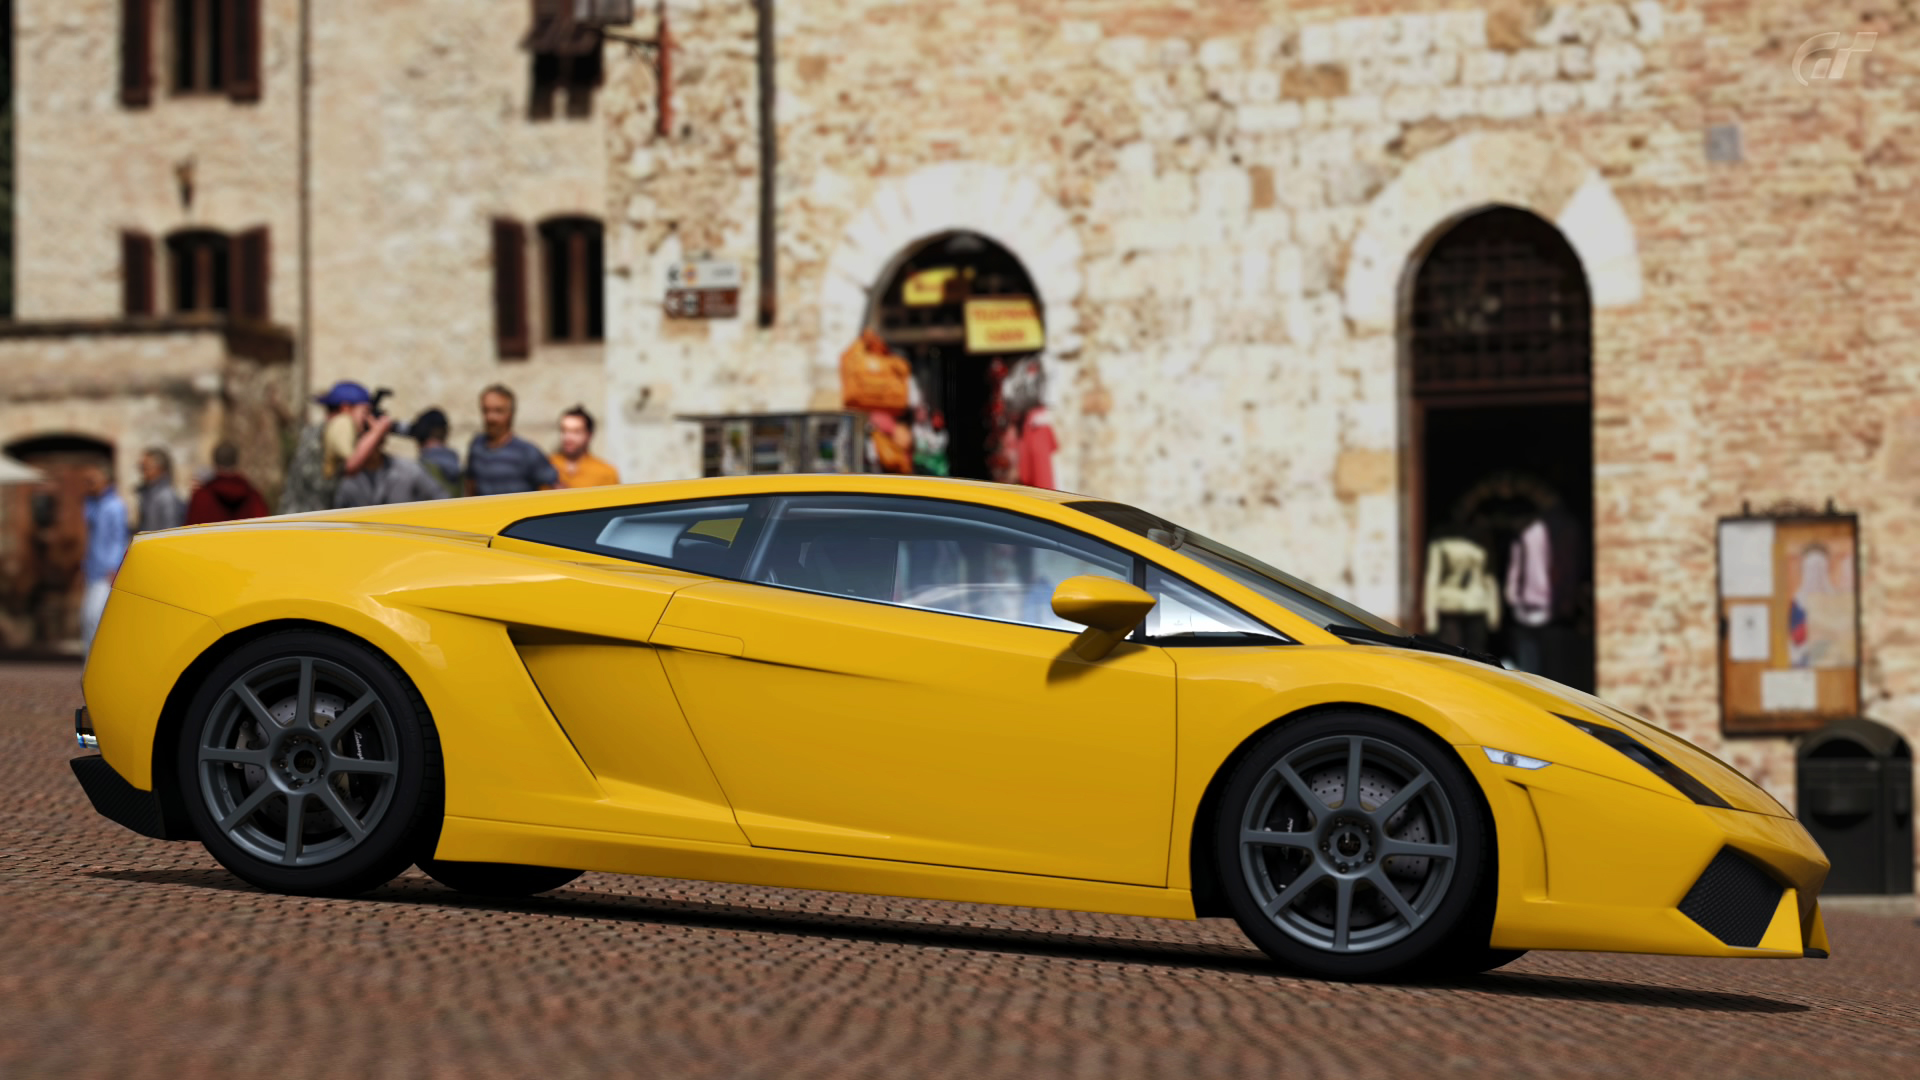 2008 Lamborghini Gallardo LP560-4 (Gran Turismo 5) by Vertualissimo on  DeviantArt